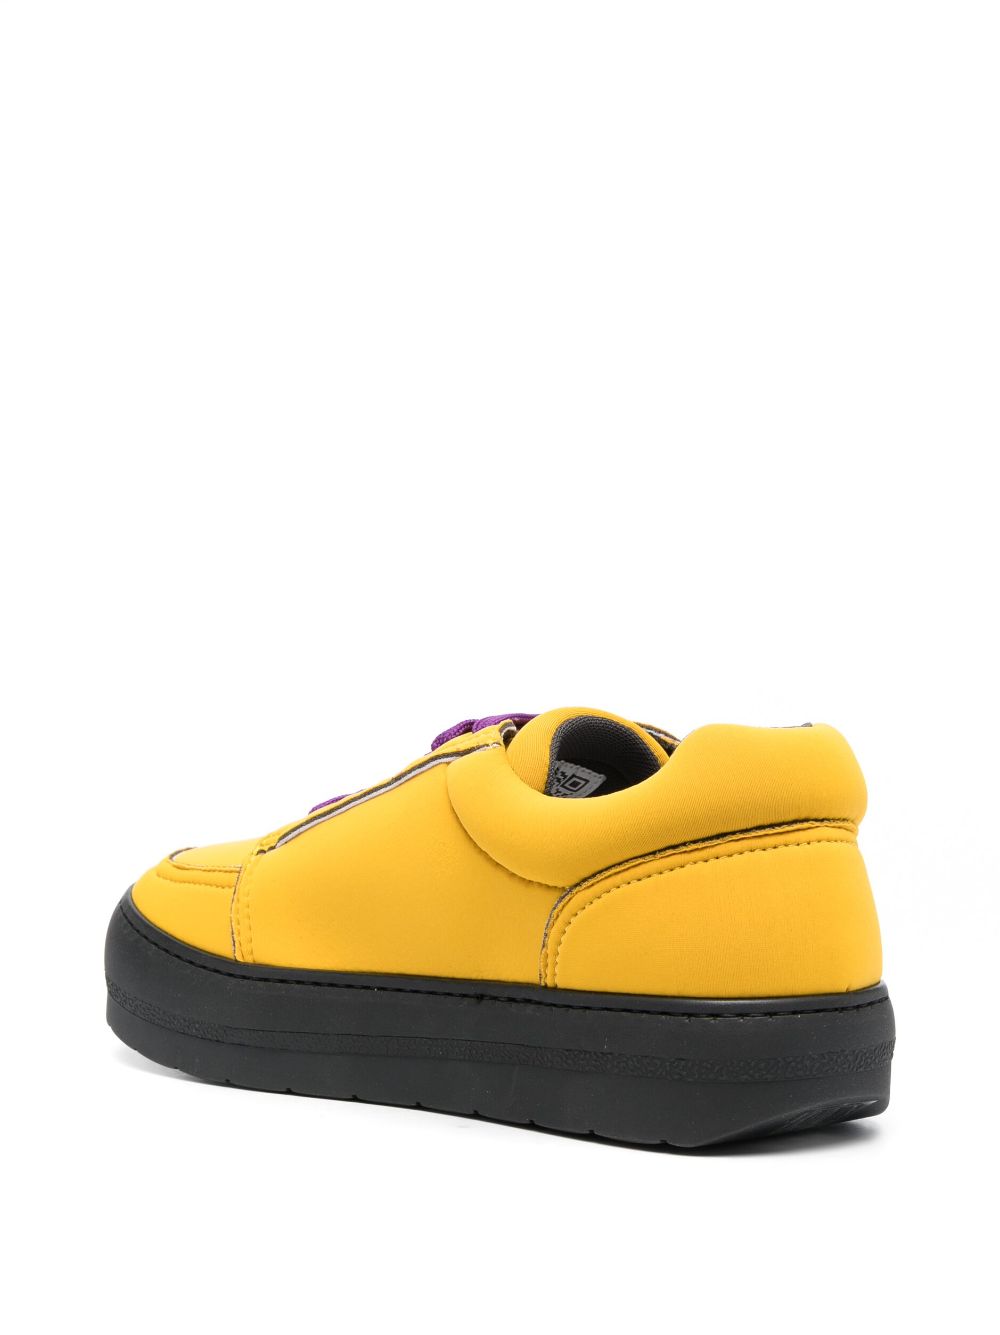 sneaker dreamy giallo mostarda